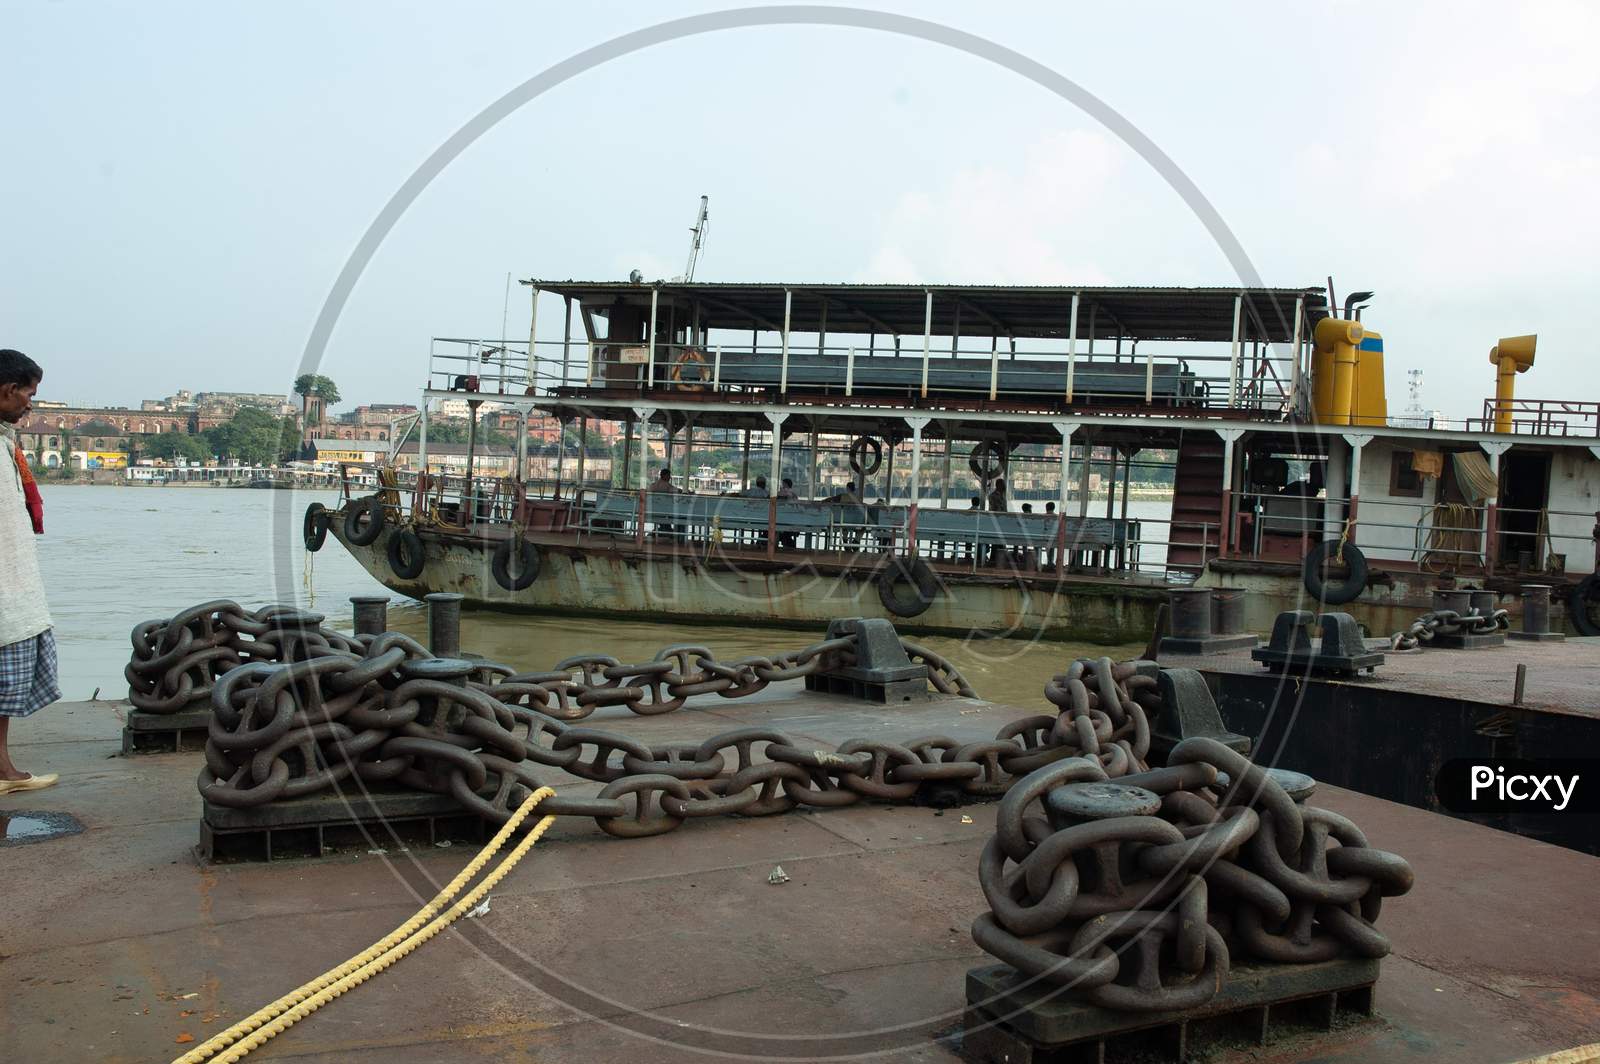 Massive chains of the port area